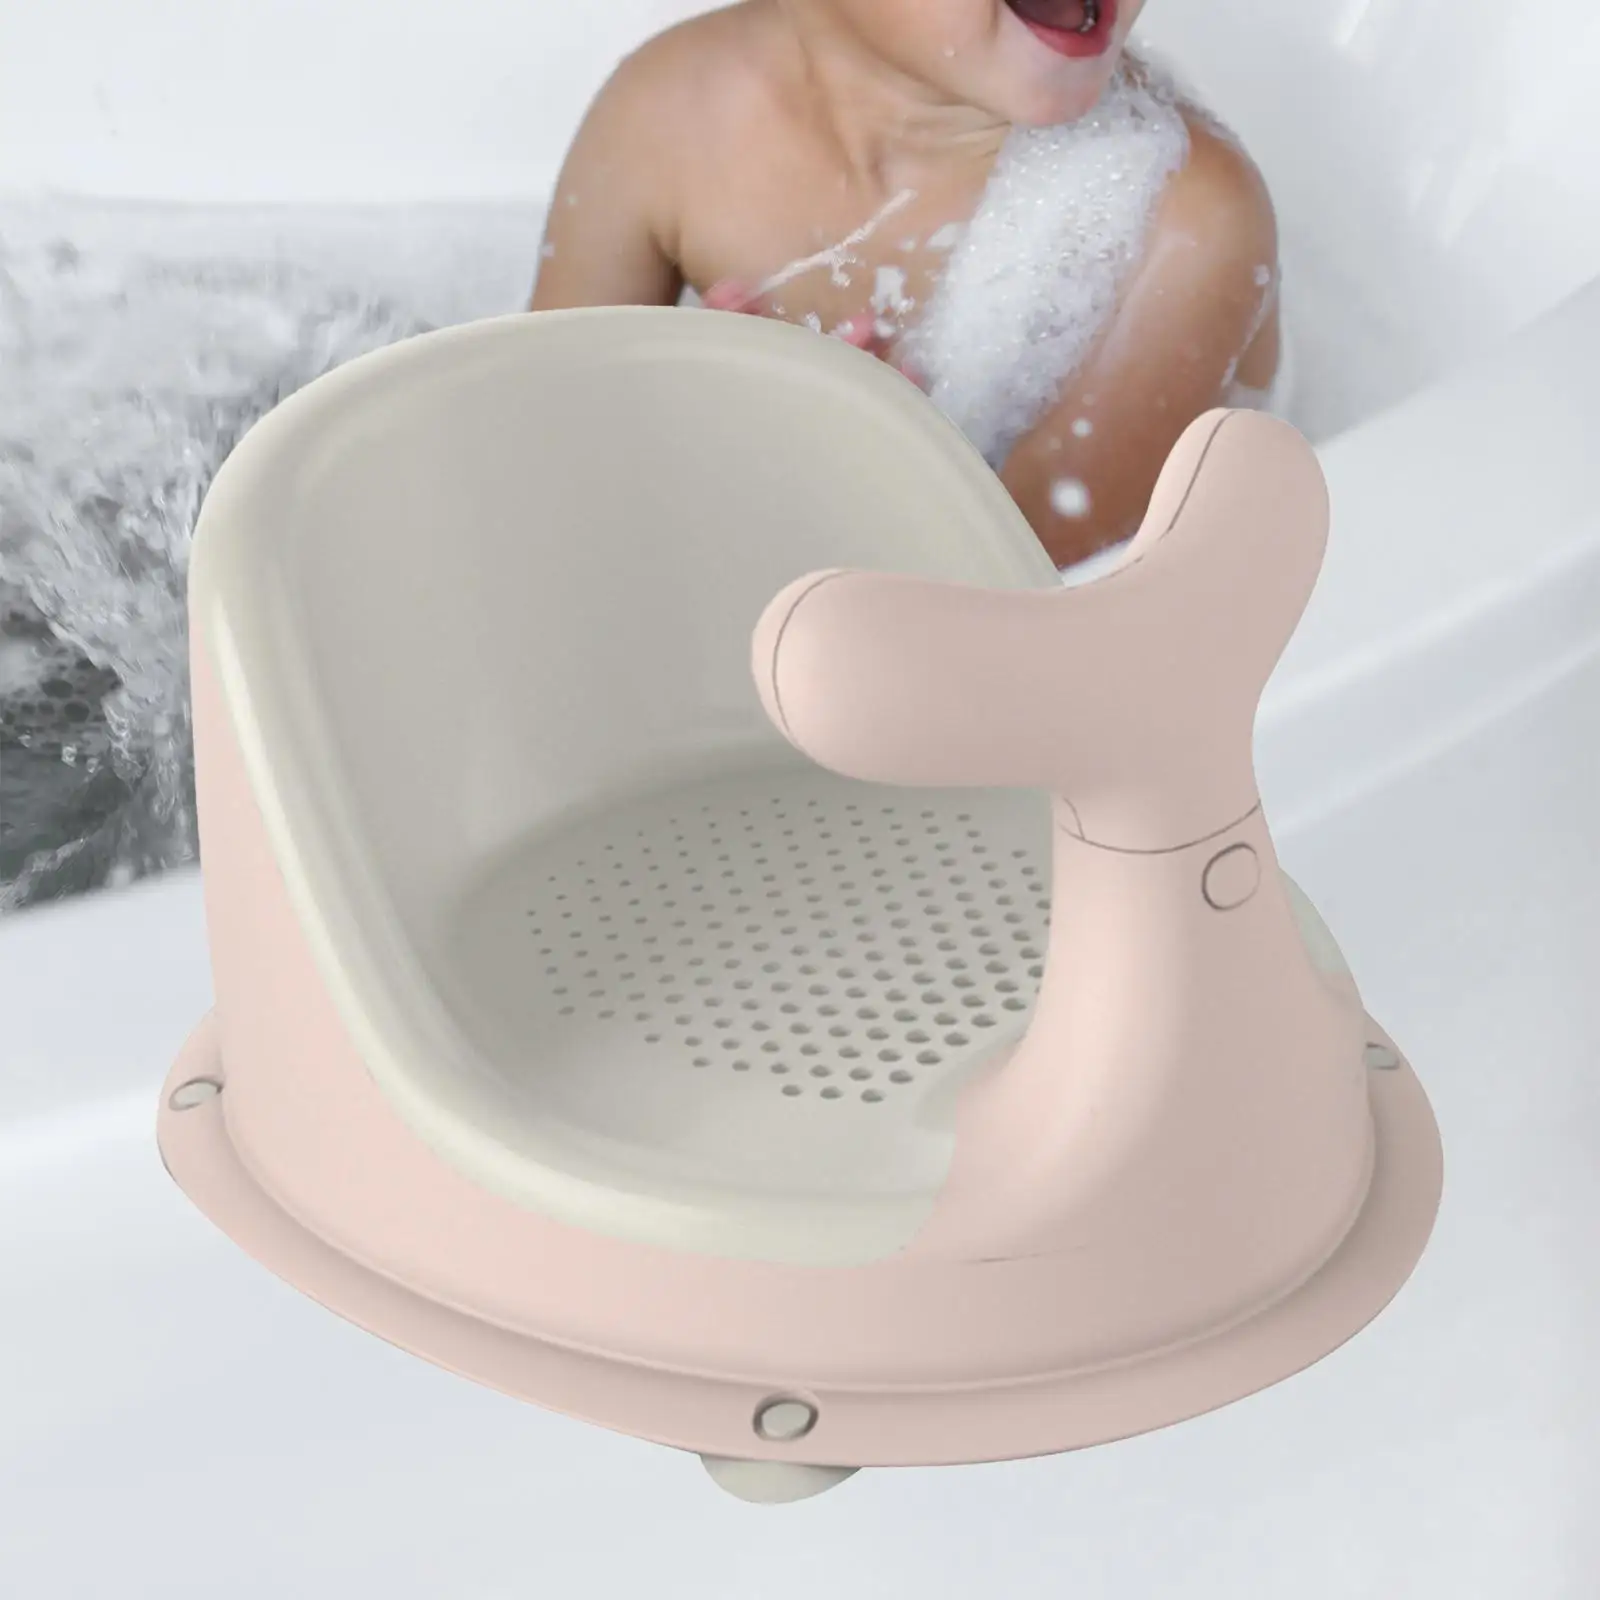 Infant Shower Chair Soft Mat Easy Storage Foldaway Sit up Durable Non Slip Surround Portable Newborn Bath Seat for Bathroom